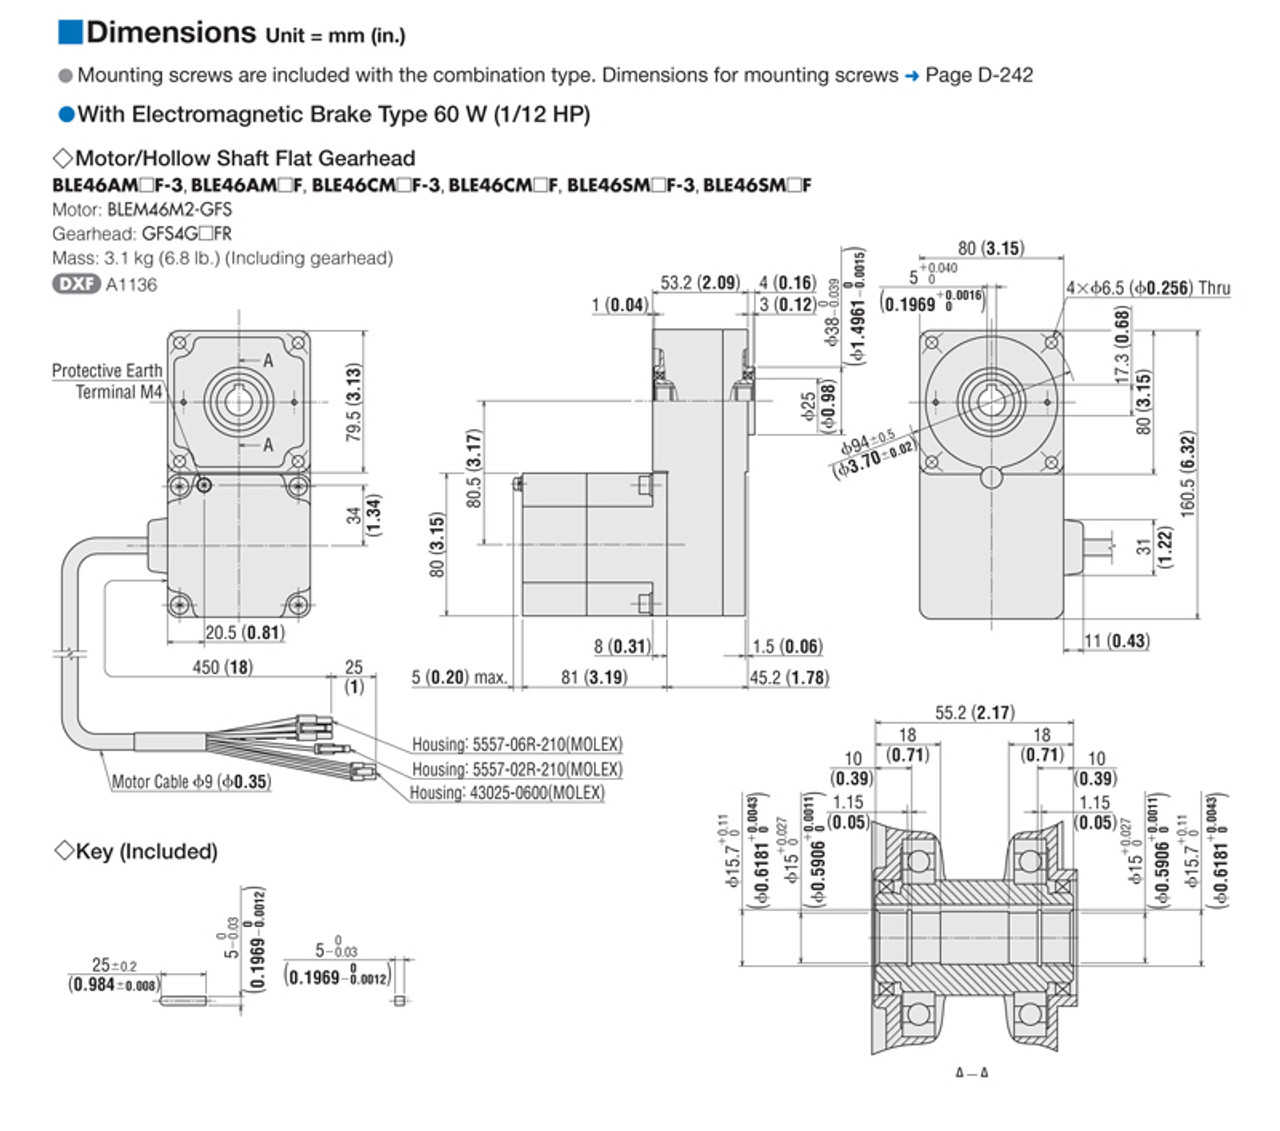 BLEM46M2-GFS / GFS4G10FR - Dimensions